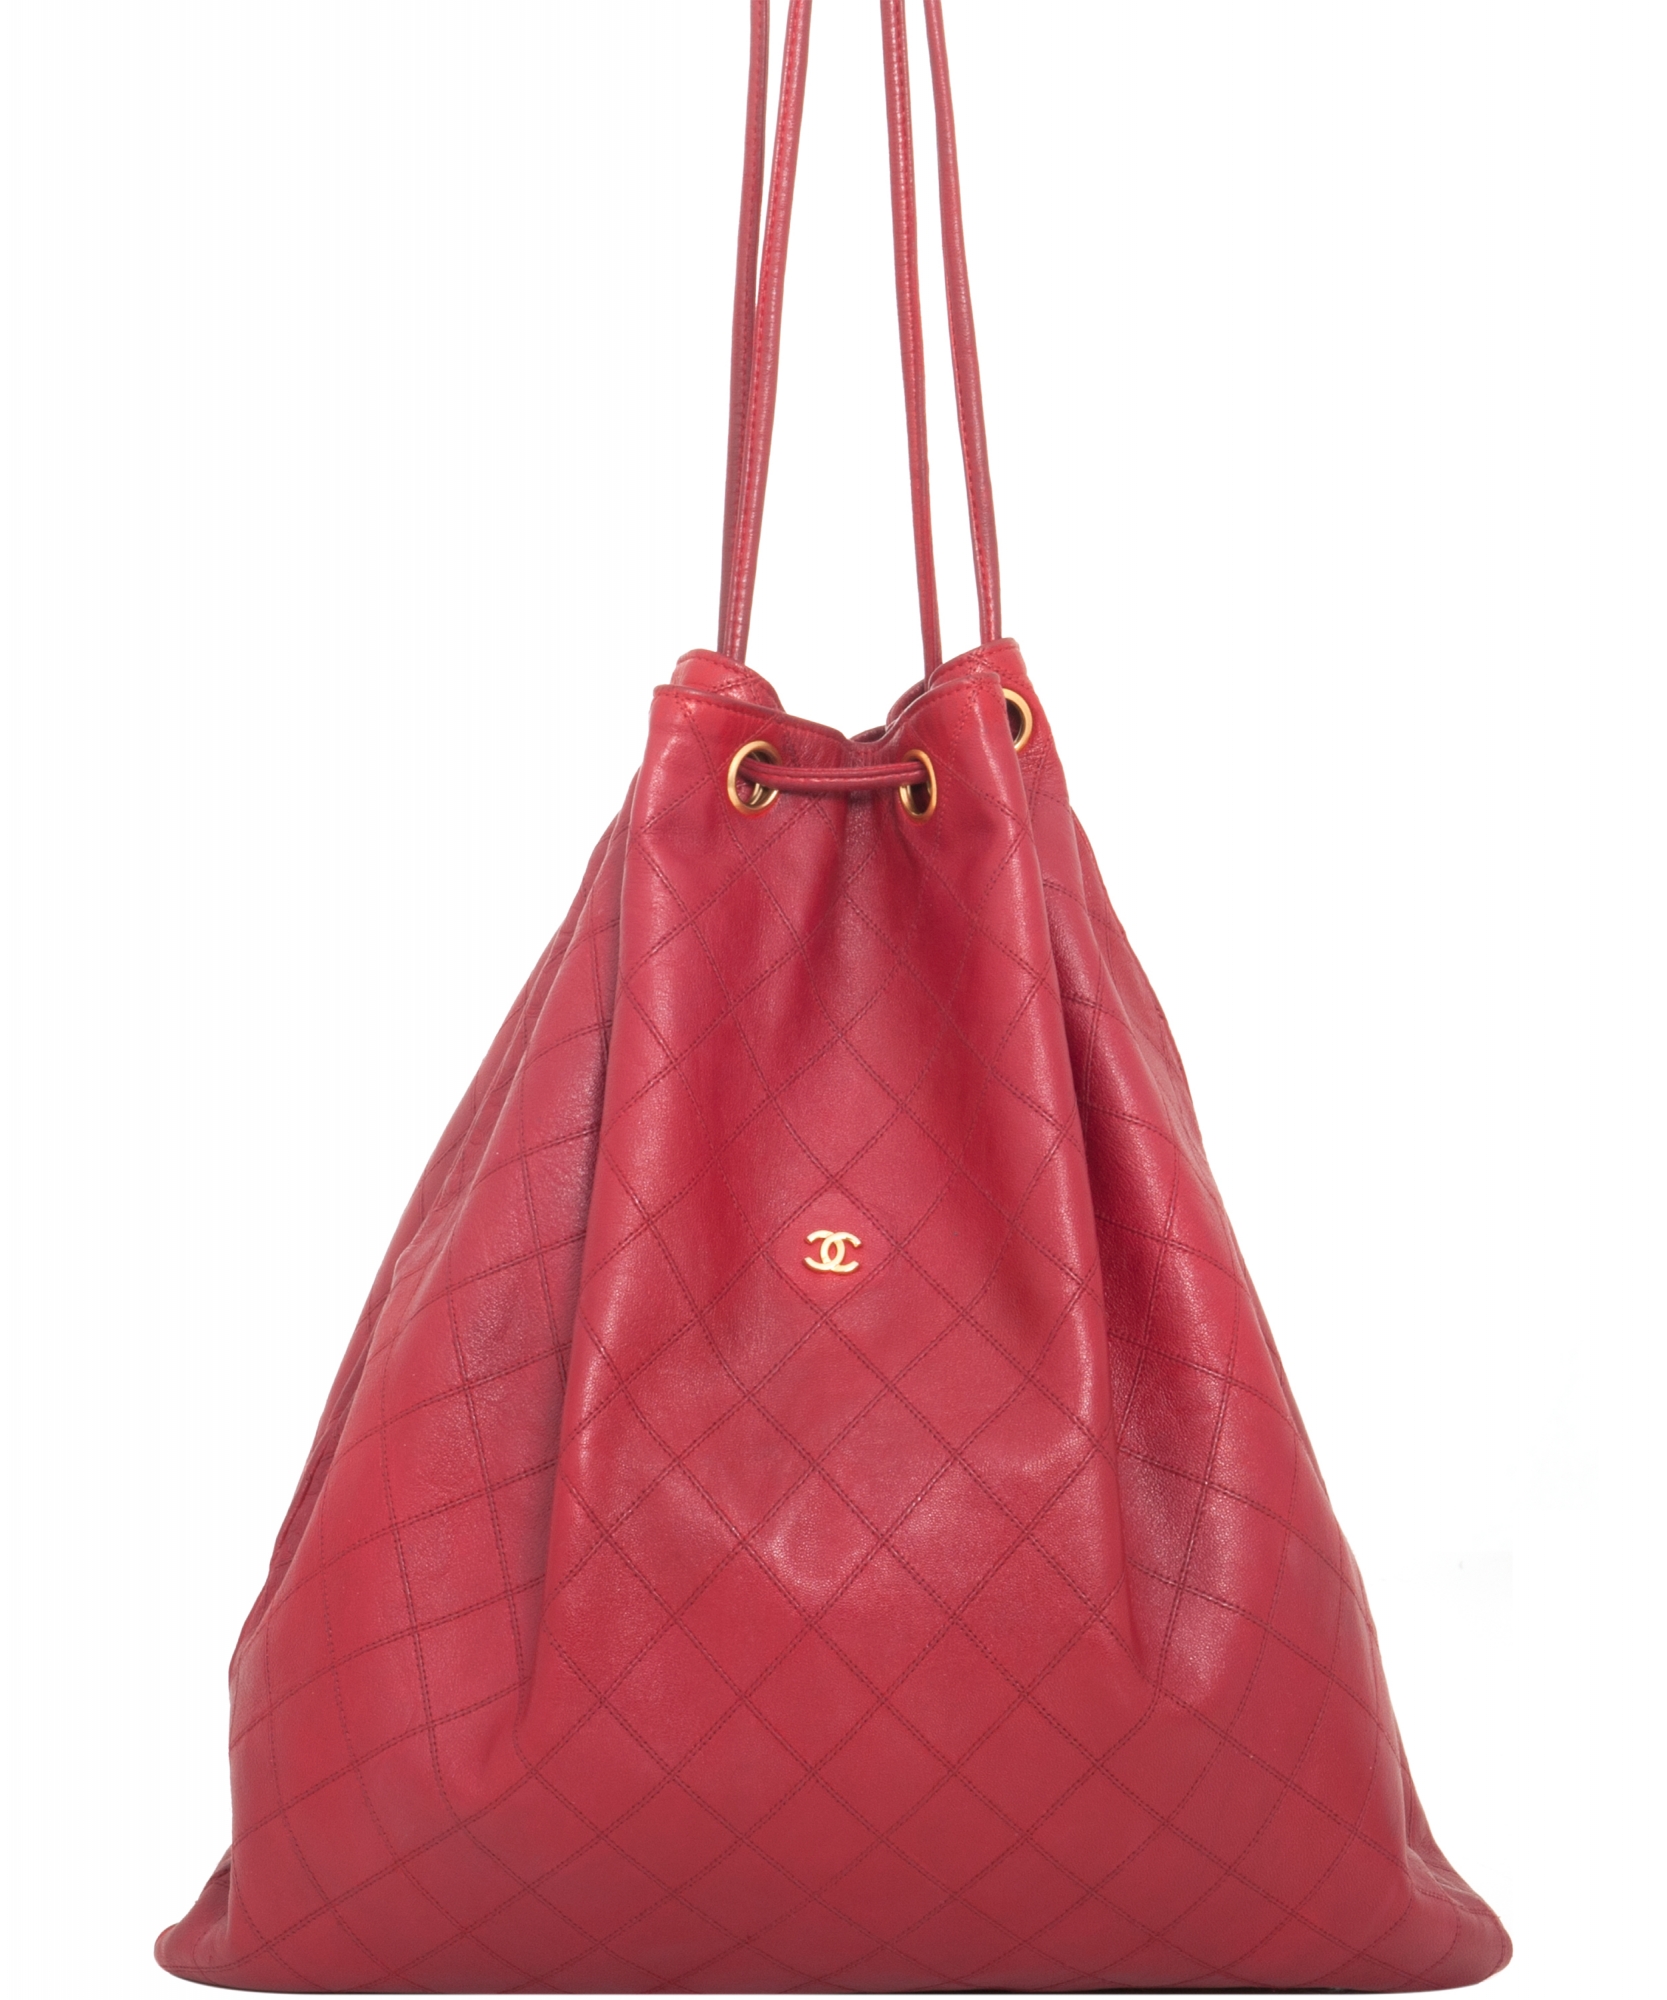 Chanel Vintage Red Leather Drawstring Bag - Chanel | ArtListings